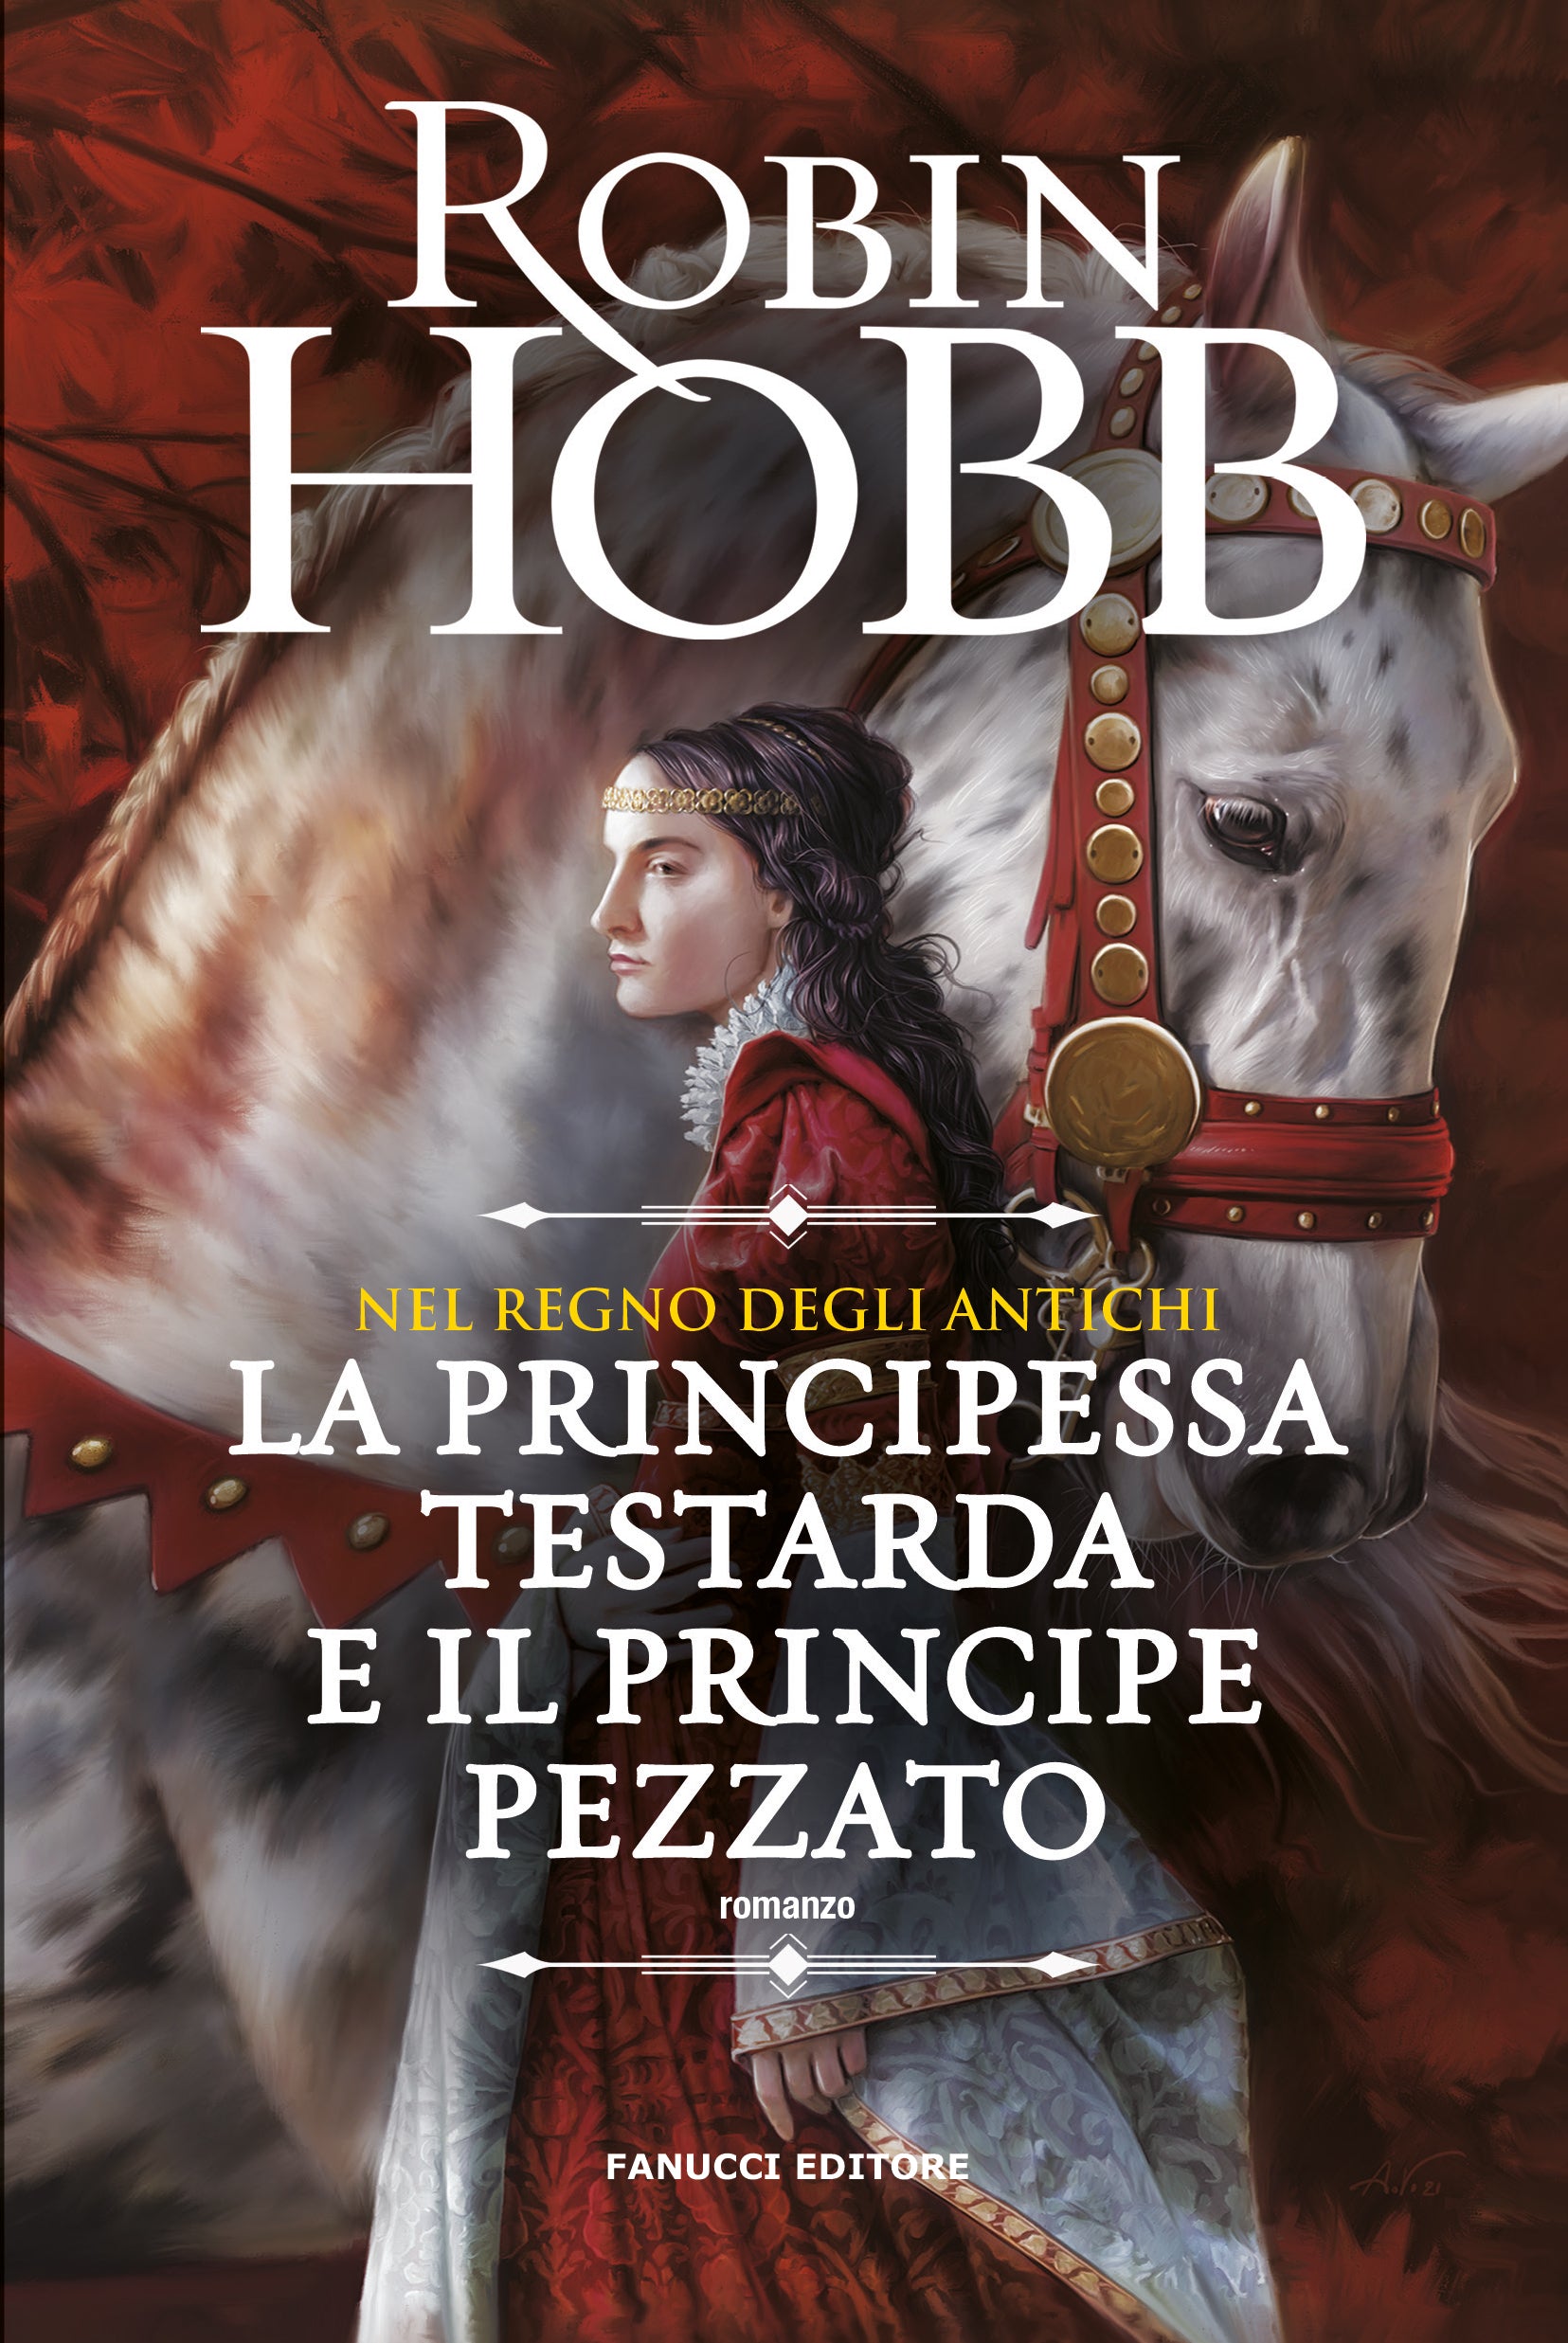 Robin Hobb – Fanucci Editore